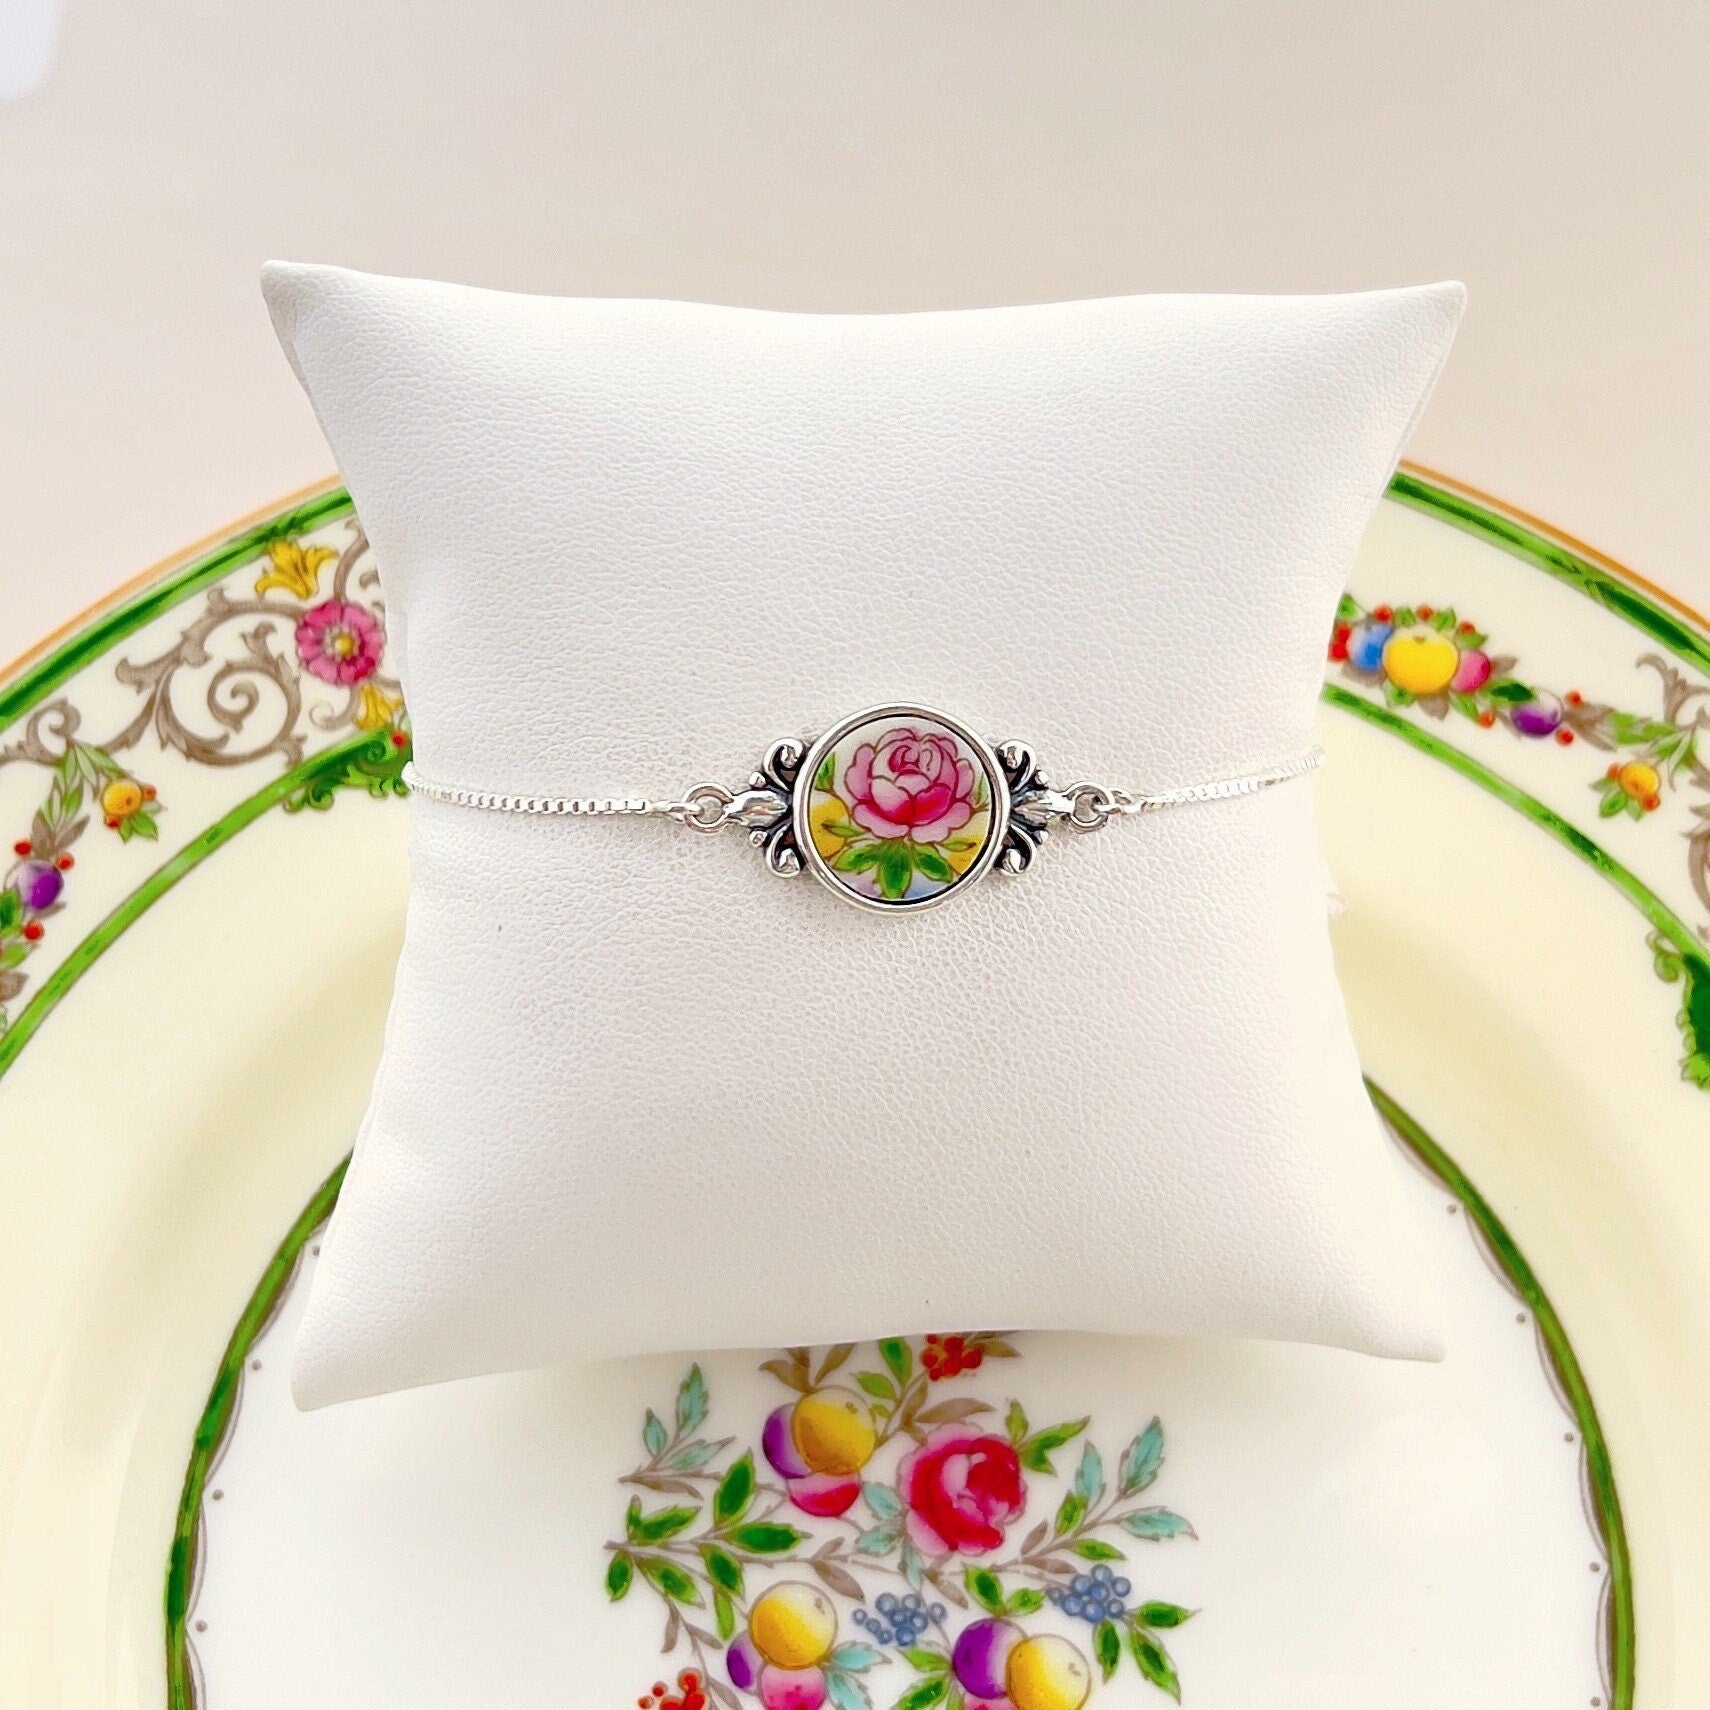 Dainty Rose Broken China Jewelry Bracelet, Gifts for Women, Adjustable Bolo Bracelet